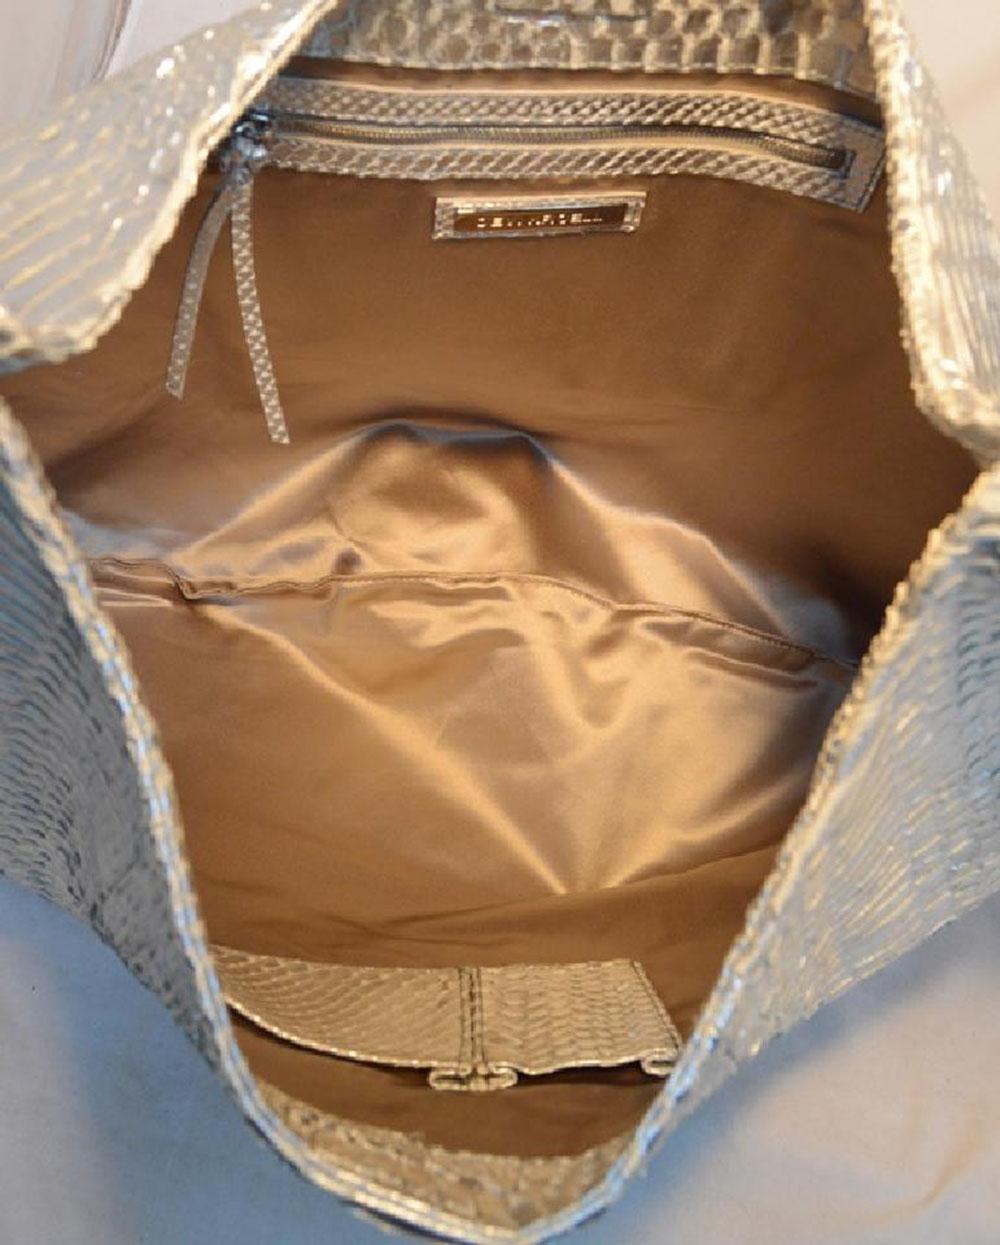 silver snakeskin bag